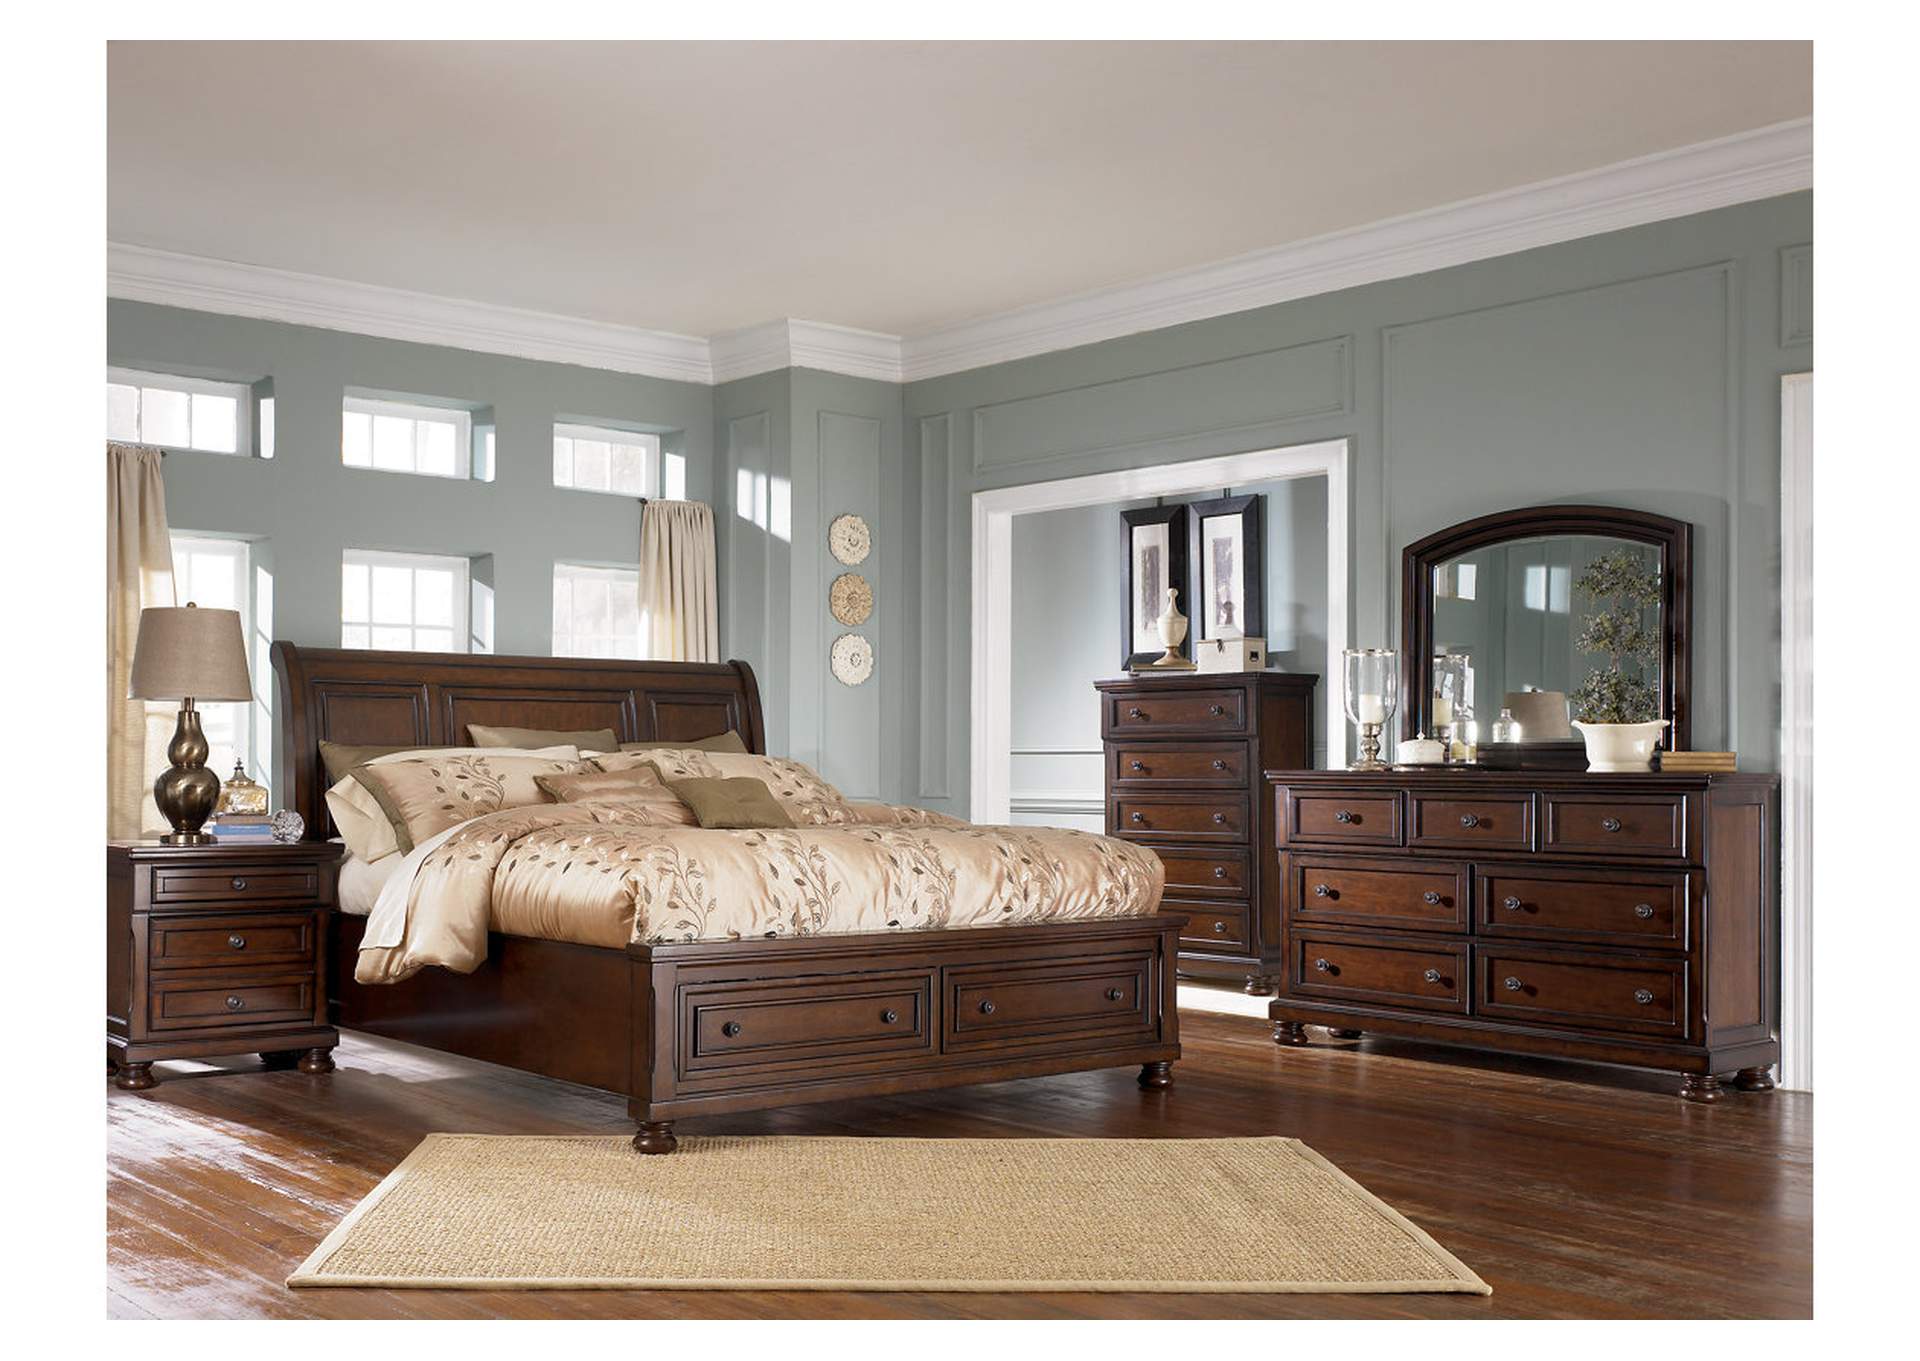 Porter Queen Sleigh Bed with Mirrored Dresser, Chest and Nightstand,Millennium